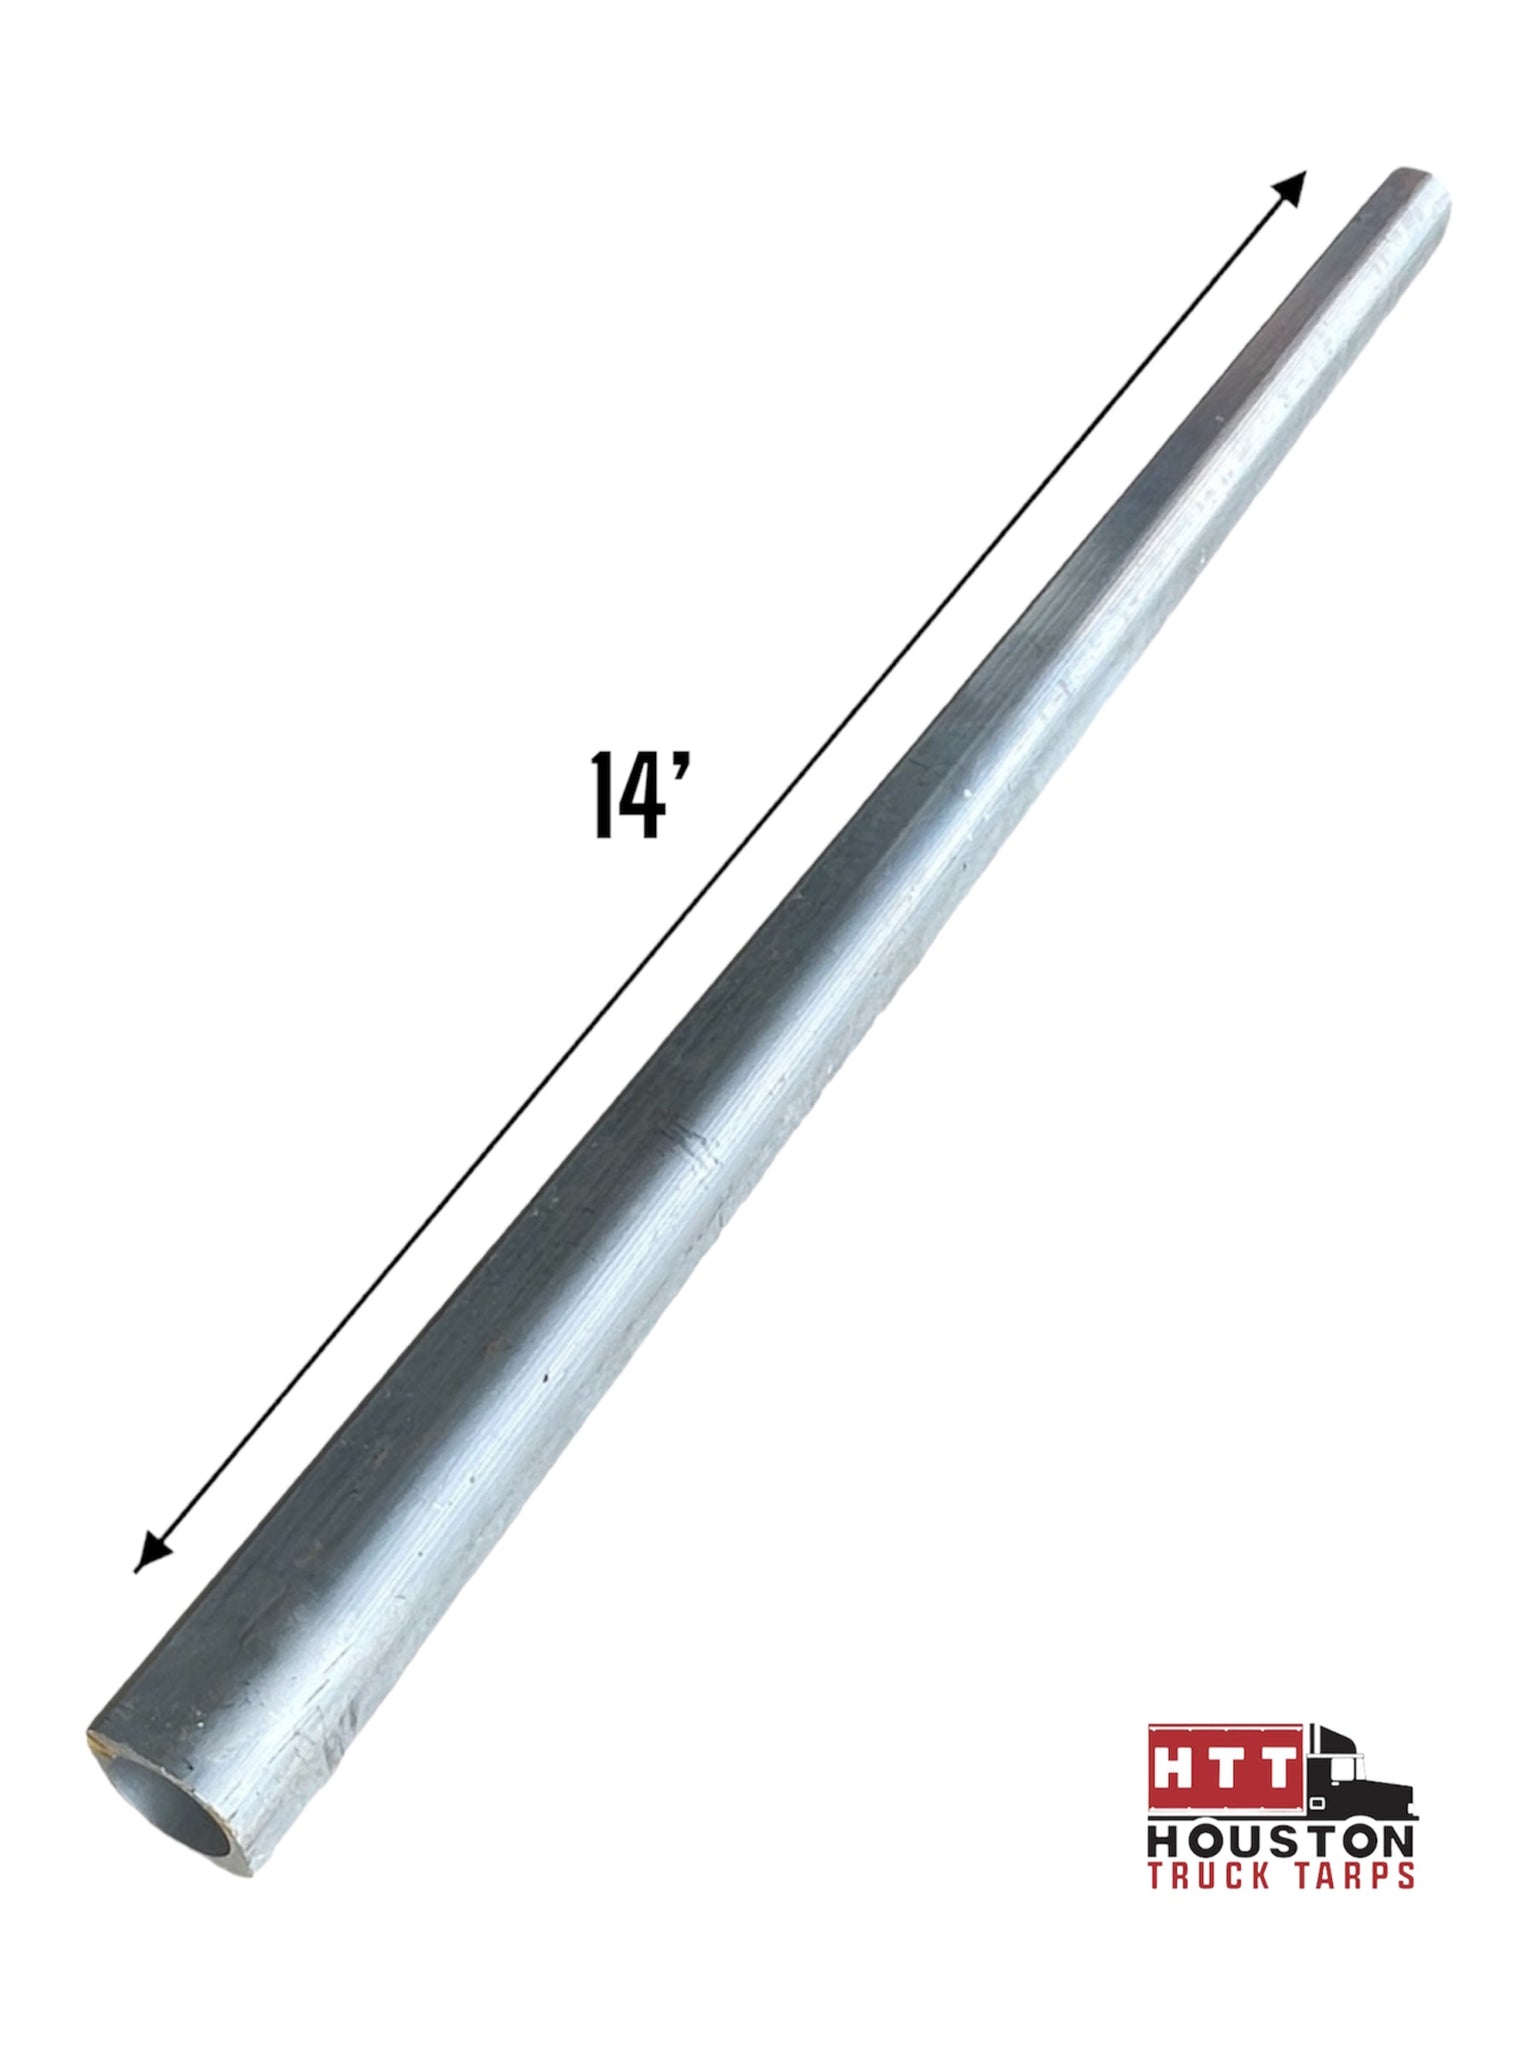 Aluminum Bulleproof Arm 14’L